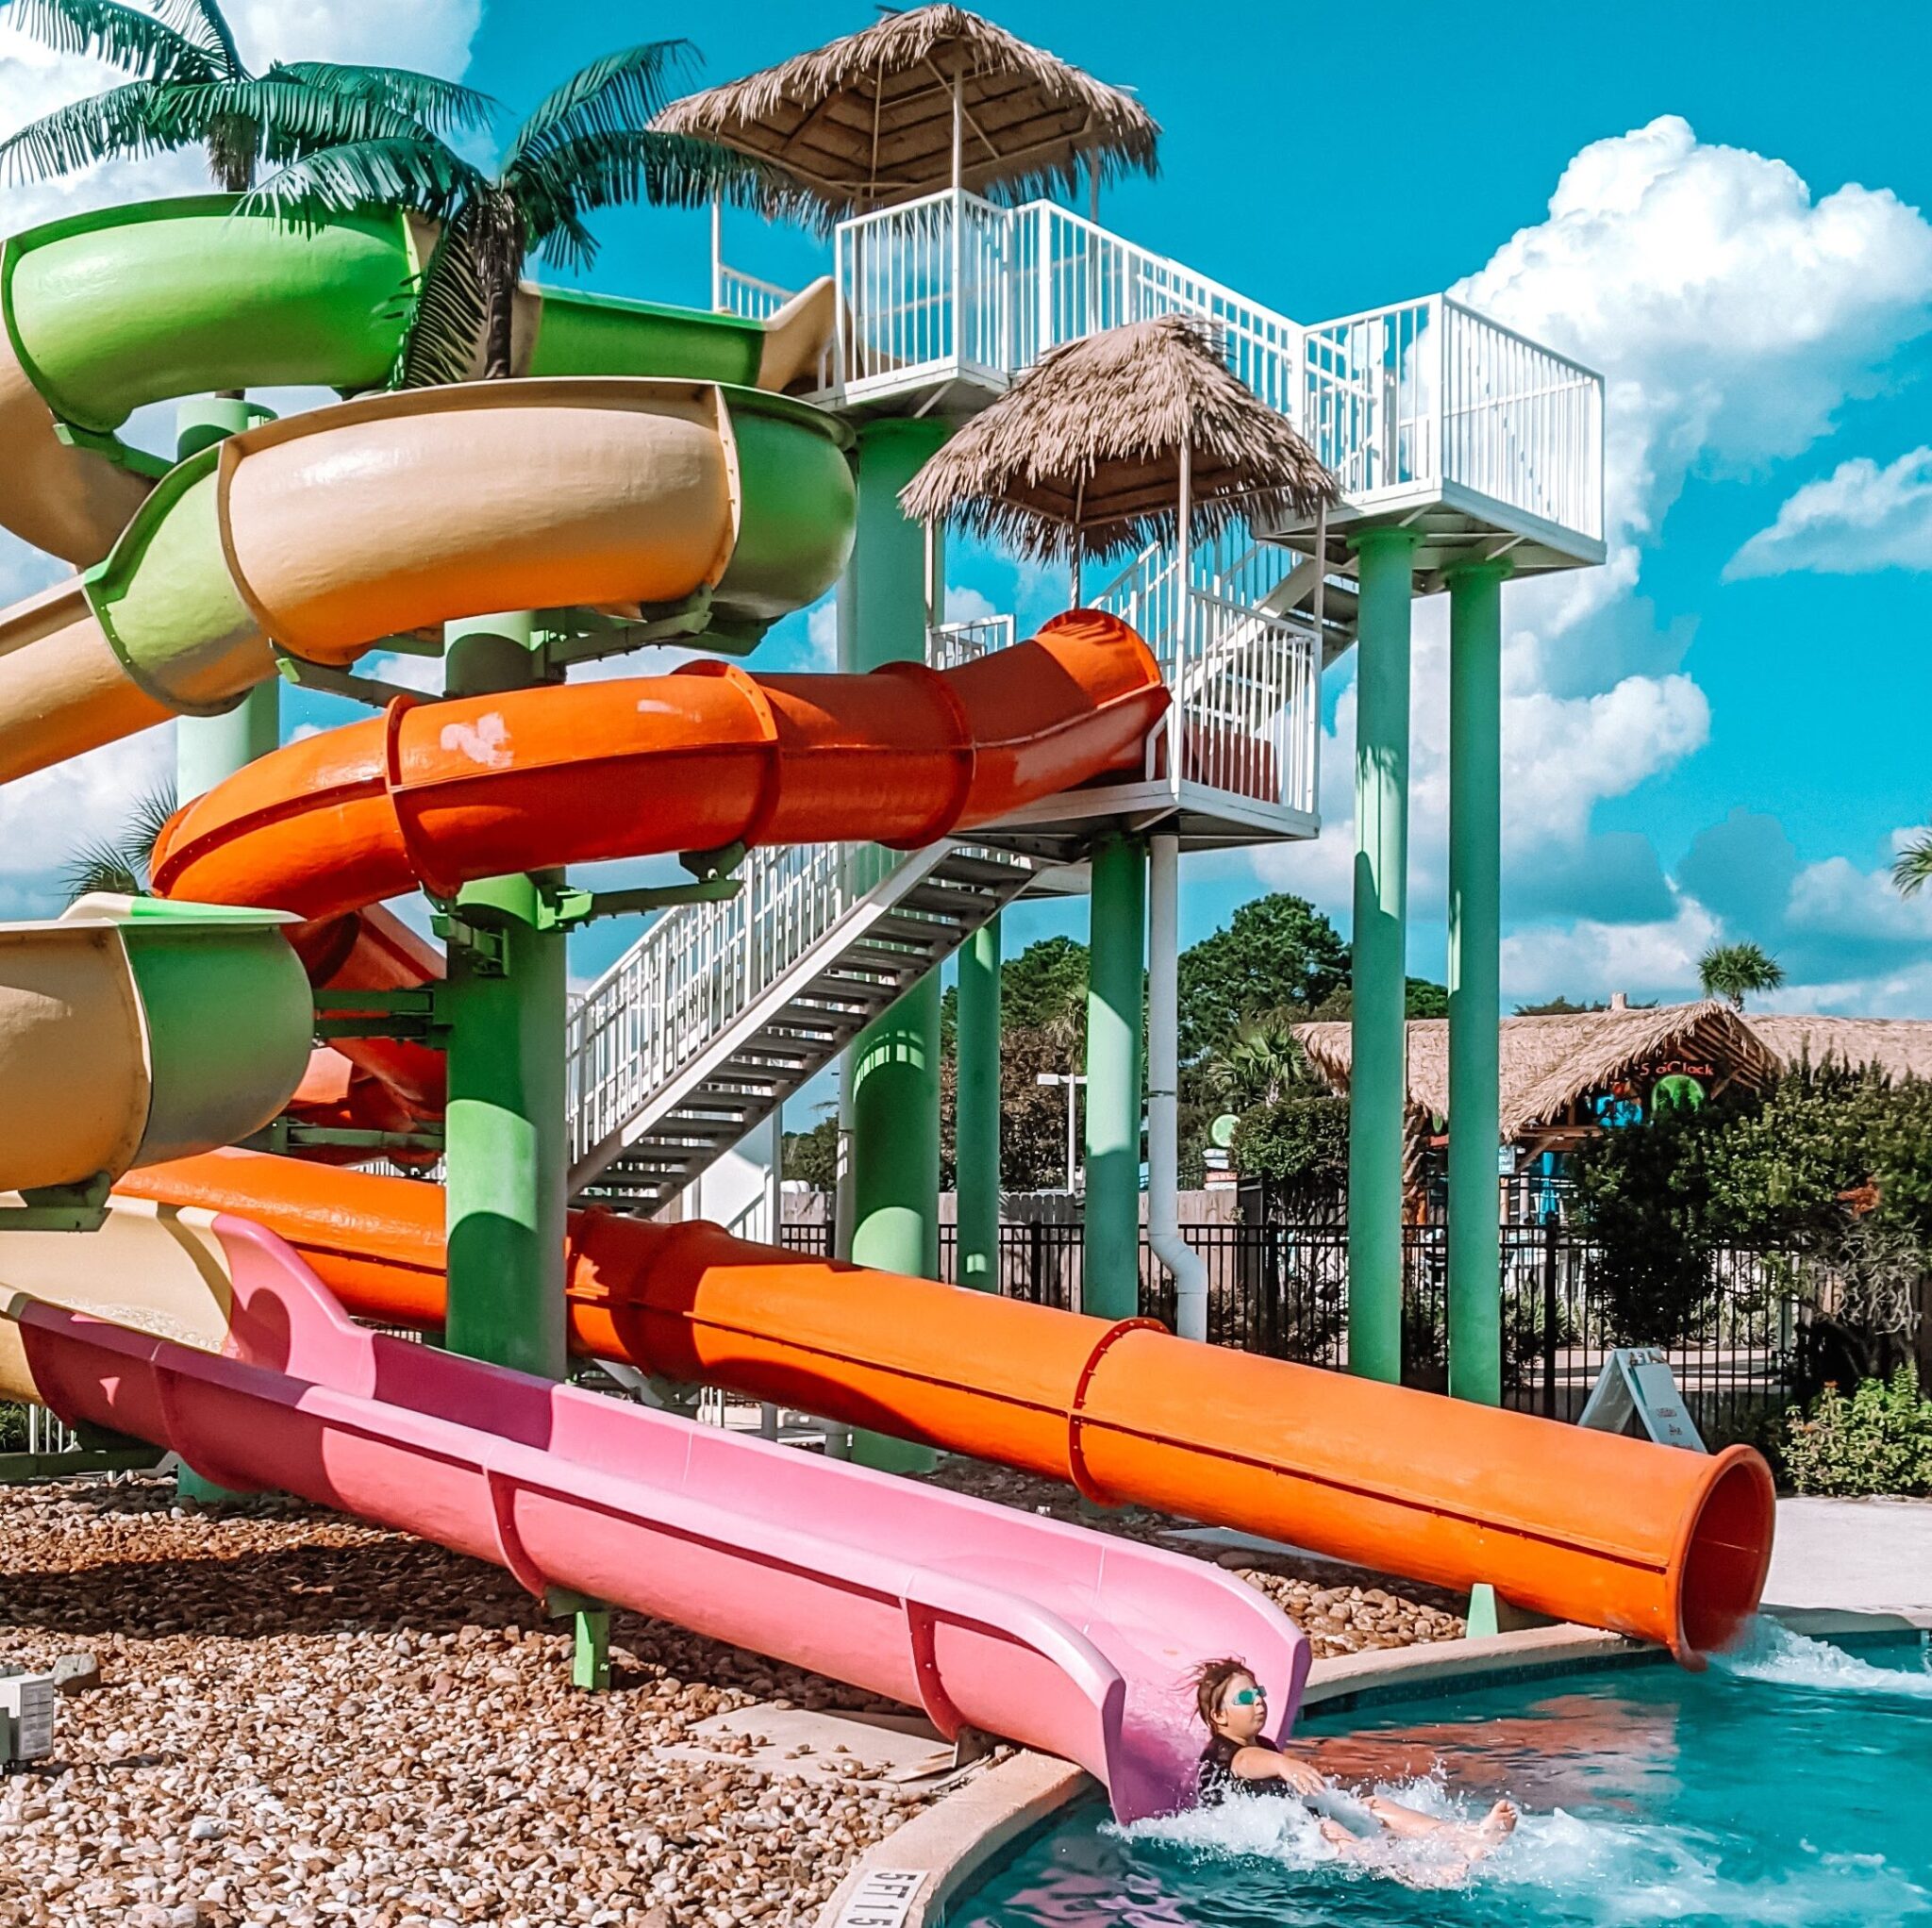 Water slides at Margaritaville Lake Conroe - Houston Tropical Family Resort